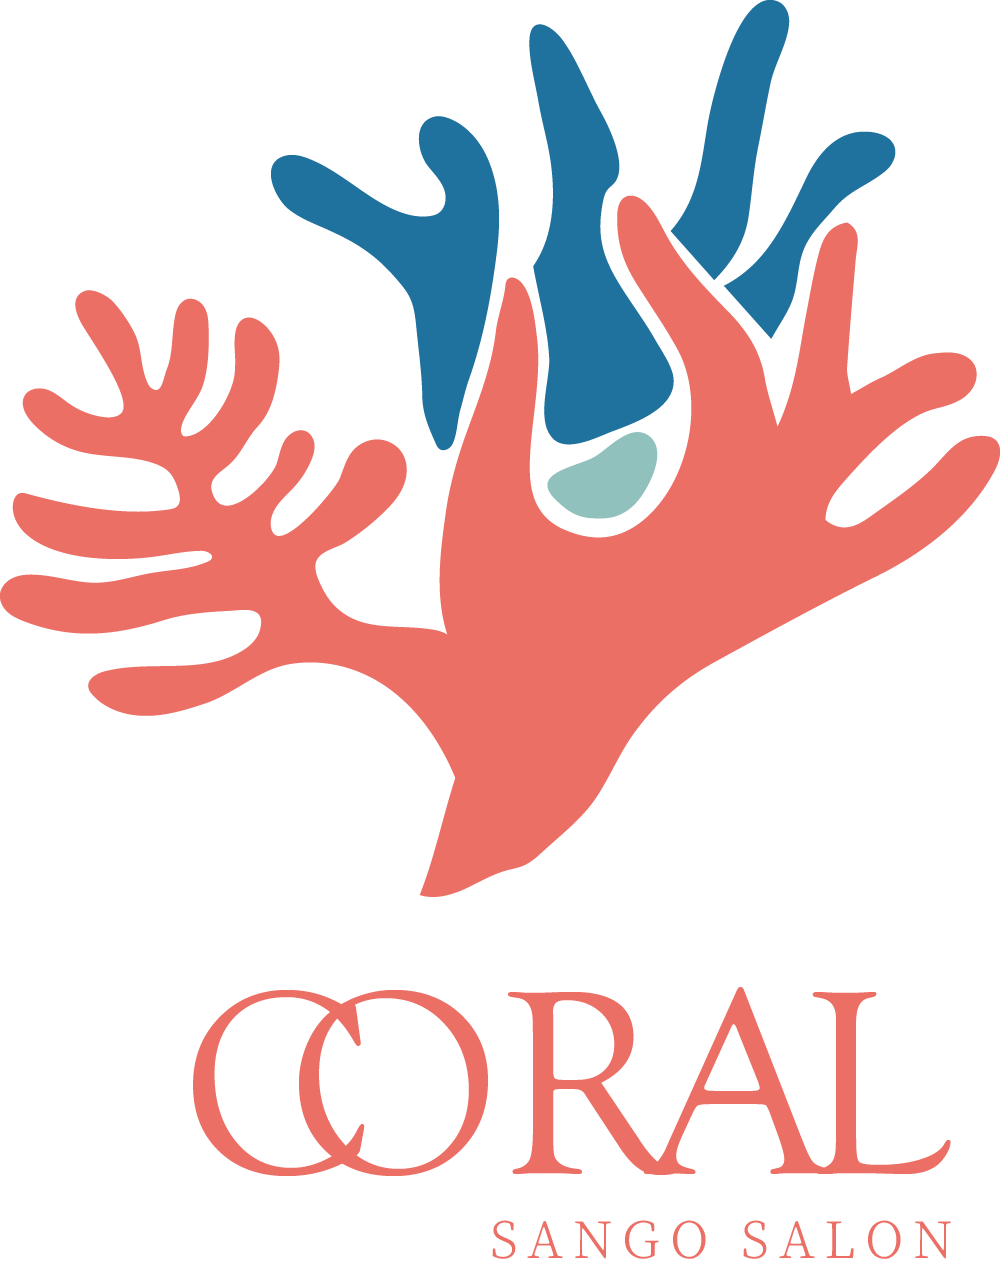 Coral-Sango logotype